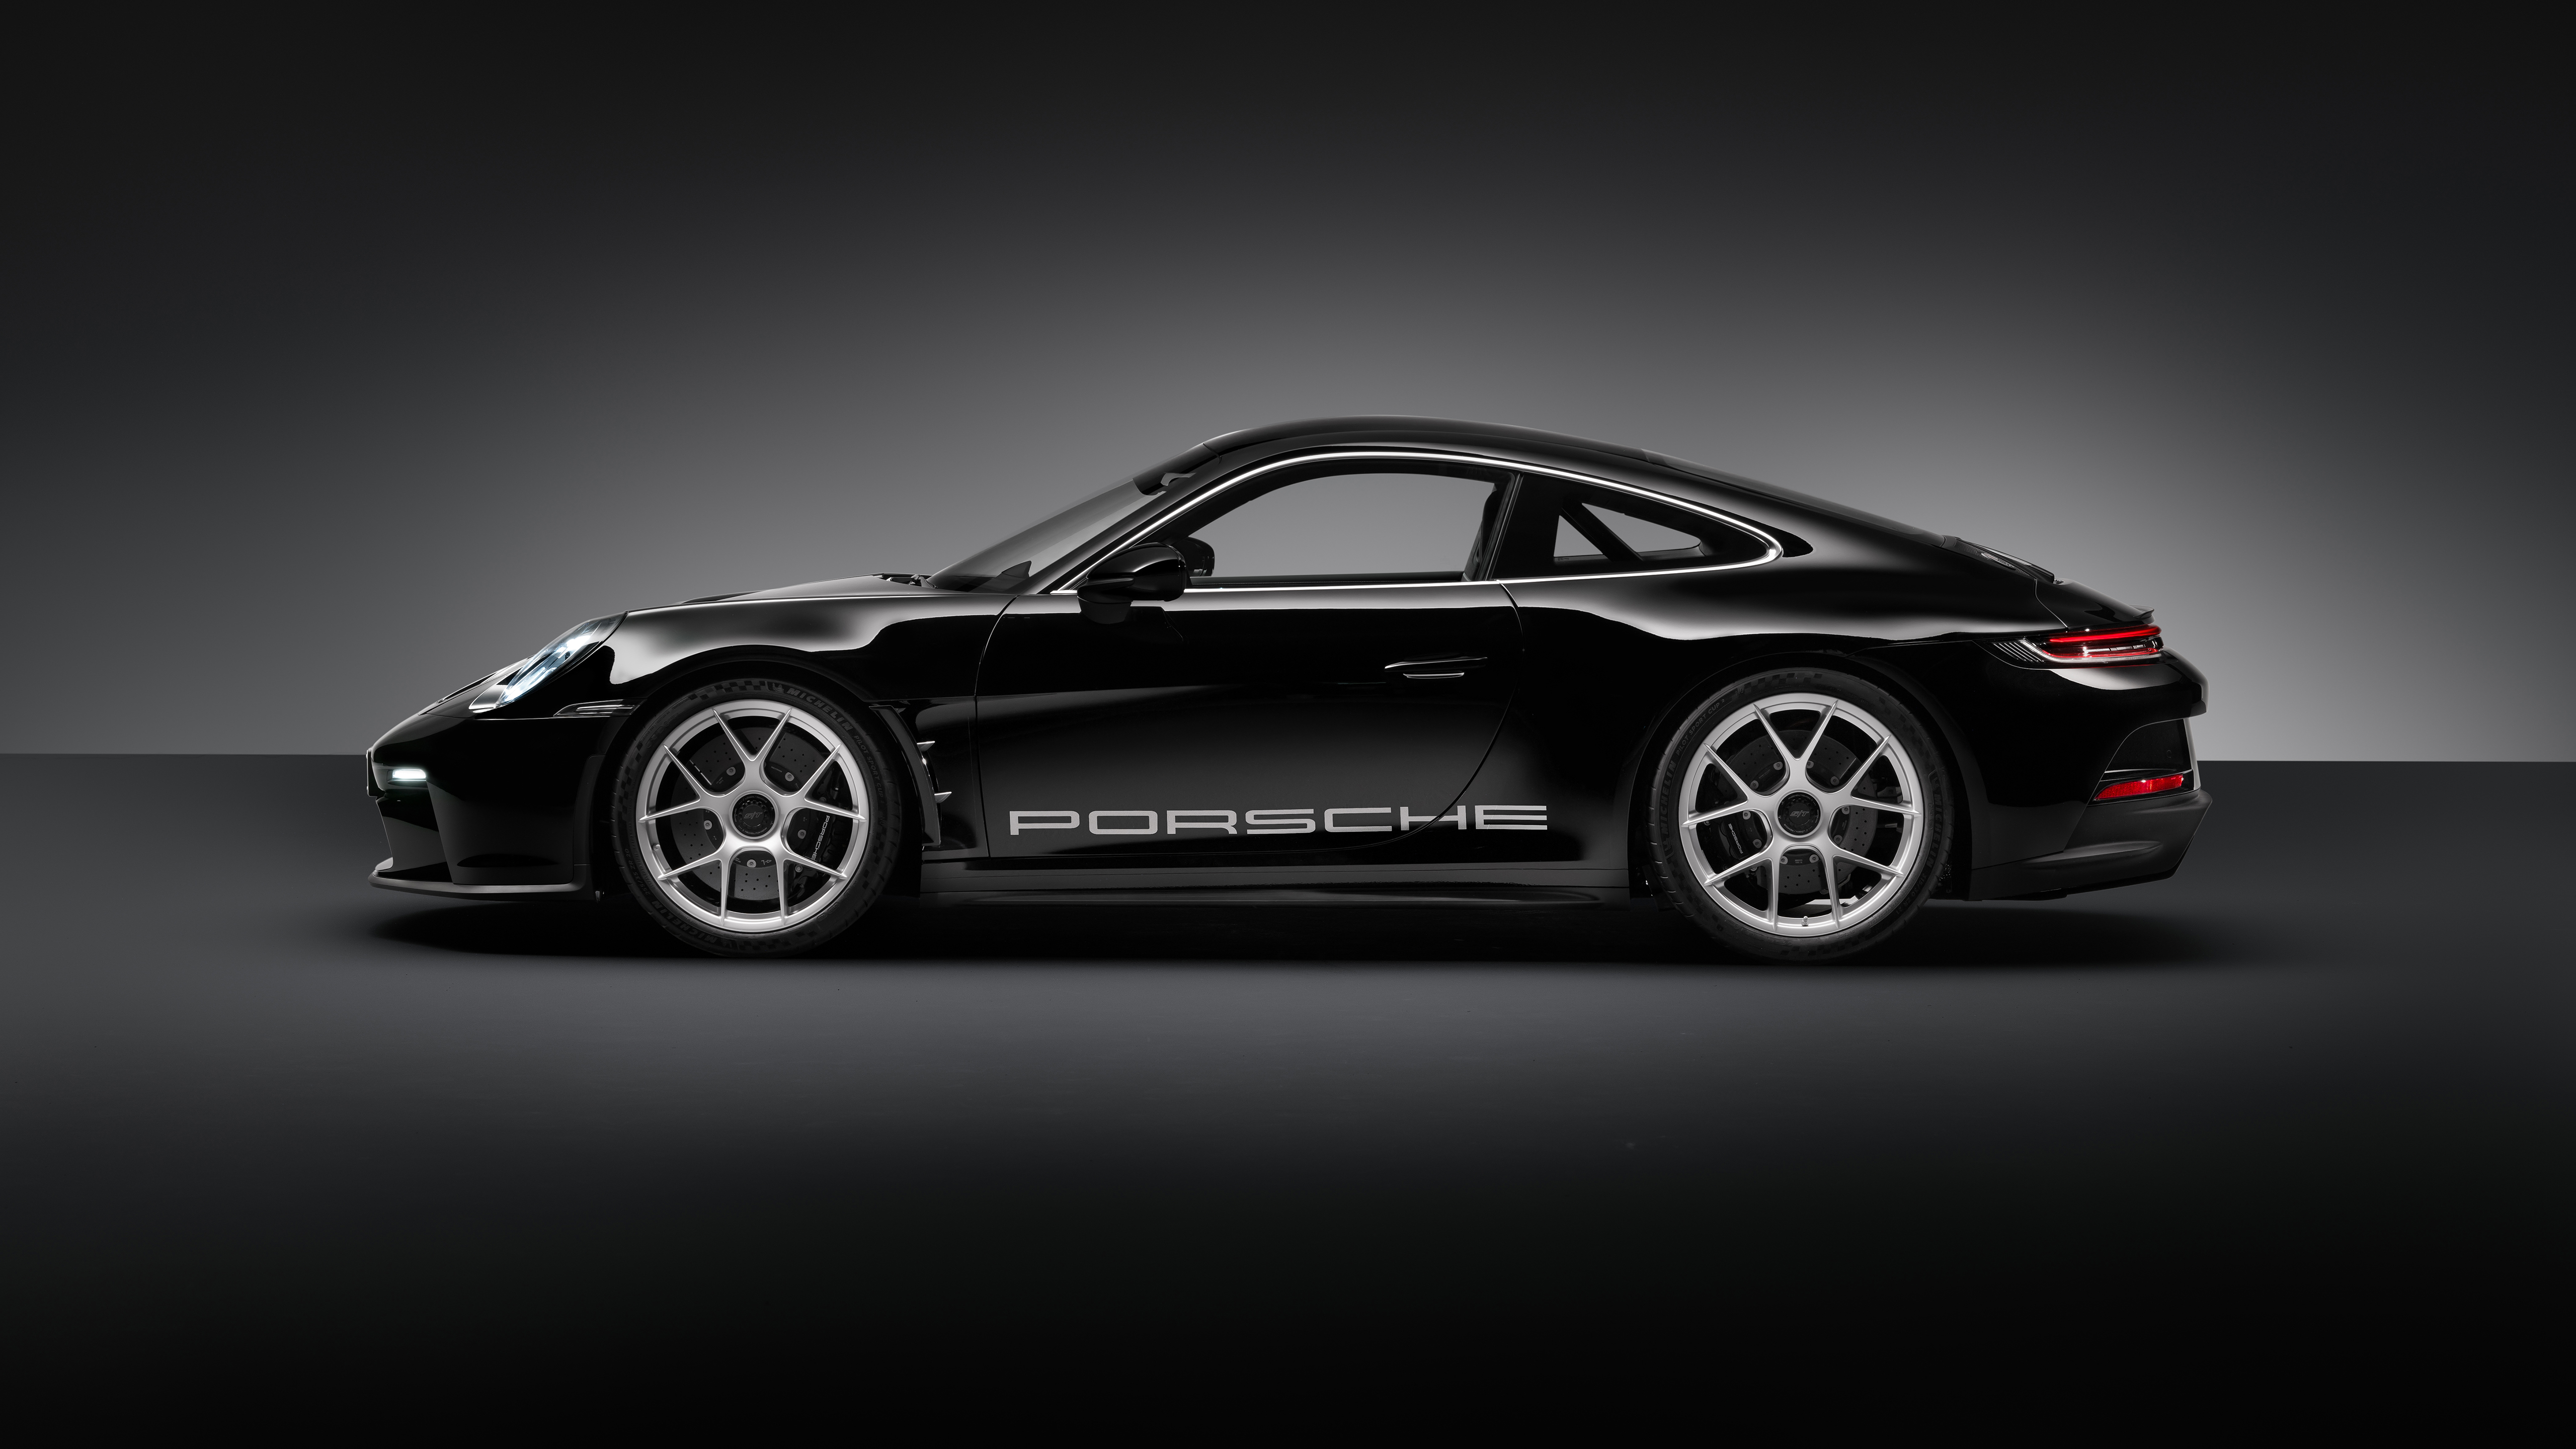 Porsche 911 Porsche Black Cars Car Sports Car German Cars Low Light 5120x2880